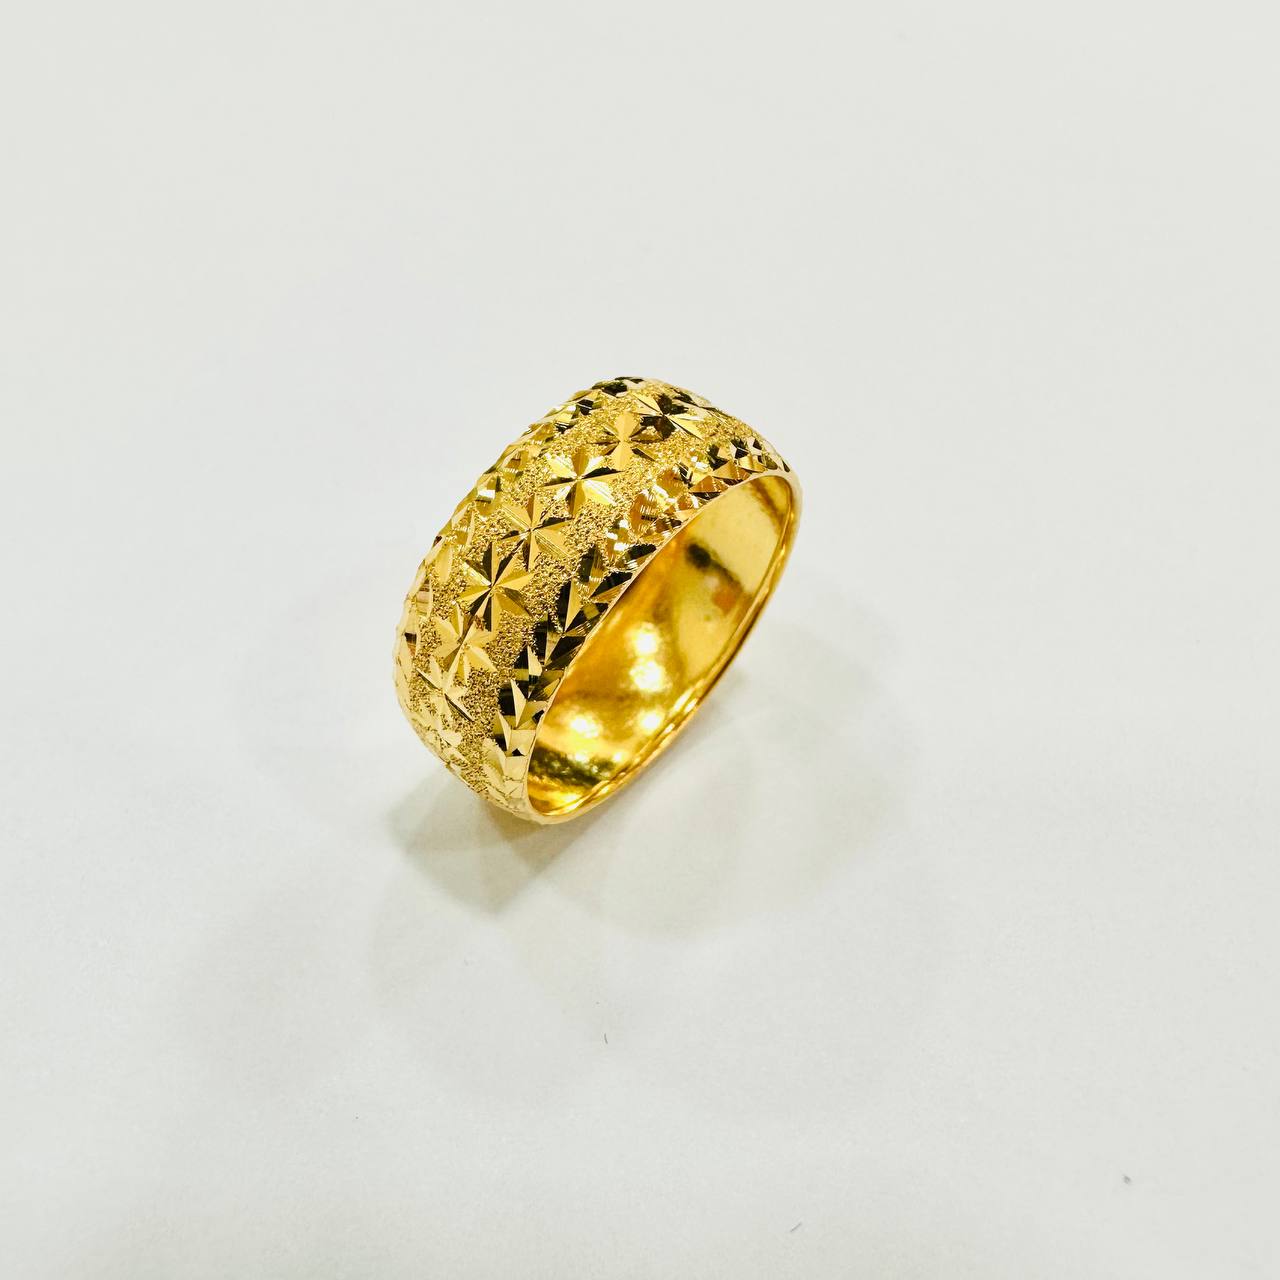 22k / 916 Gold Hollow ring Design 5-916 gold-Best Gold Shop